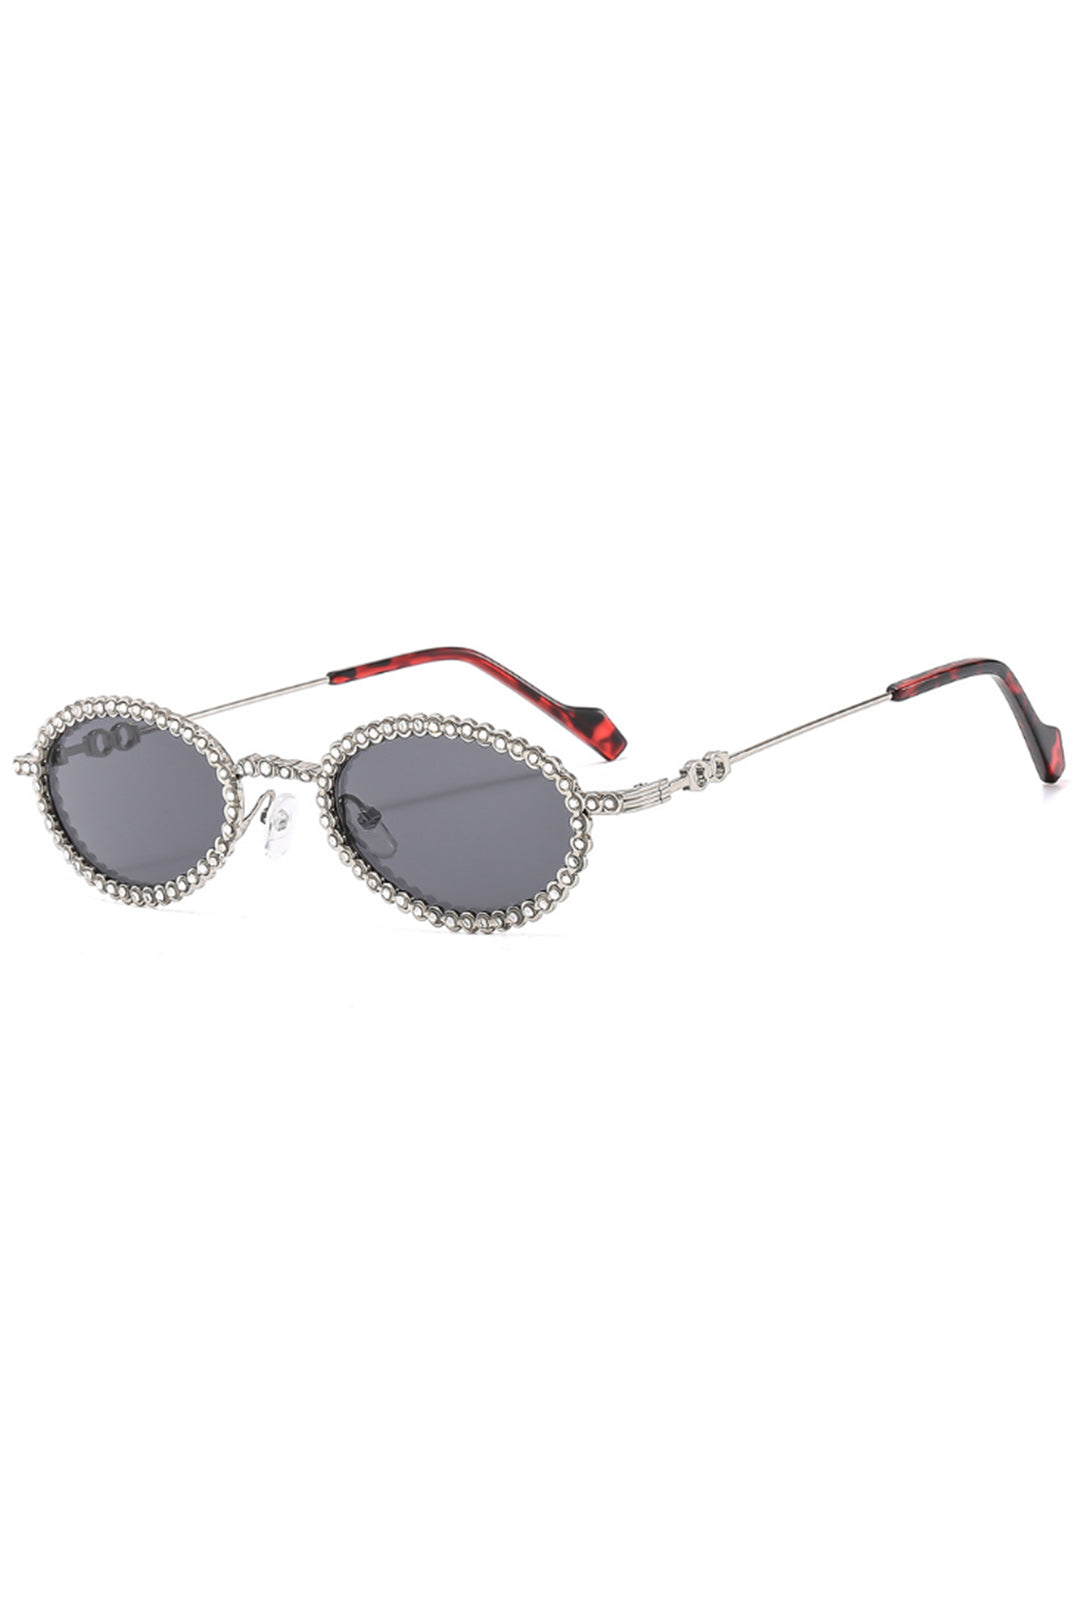 Rhinestone Oval Sunglasses